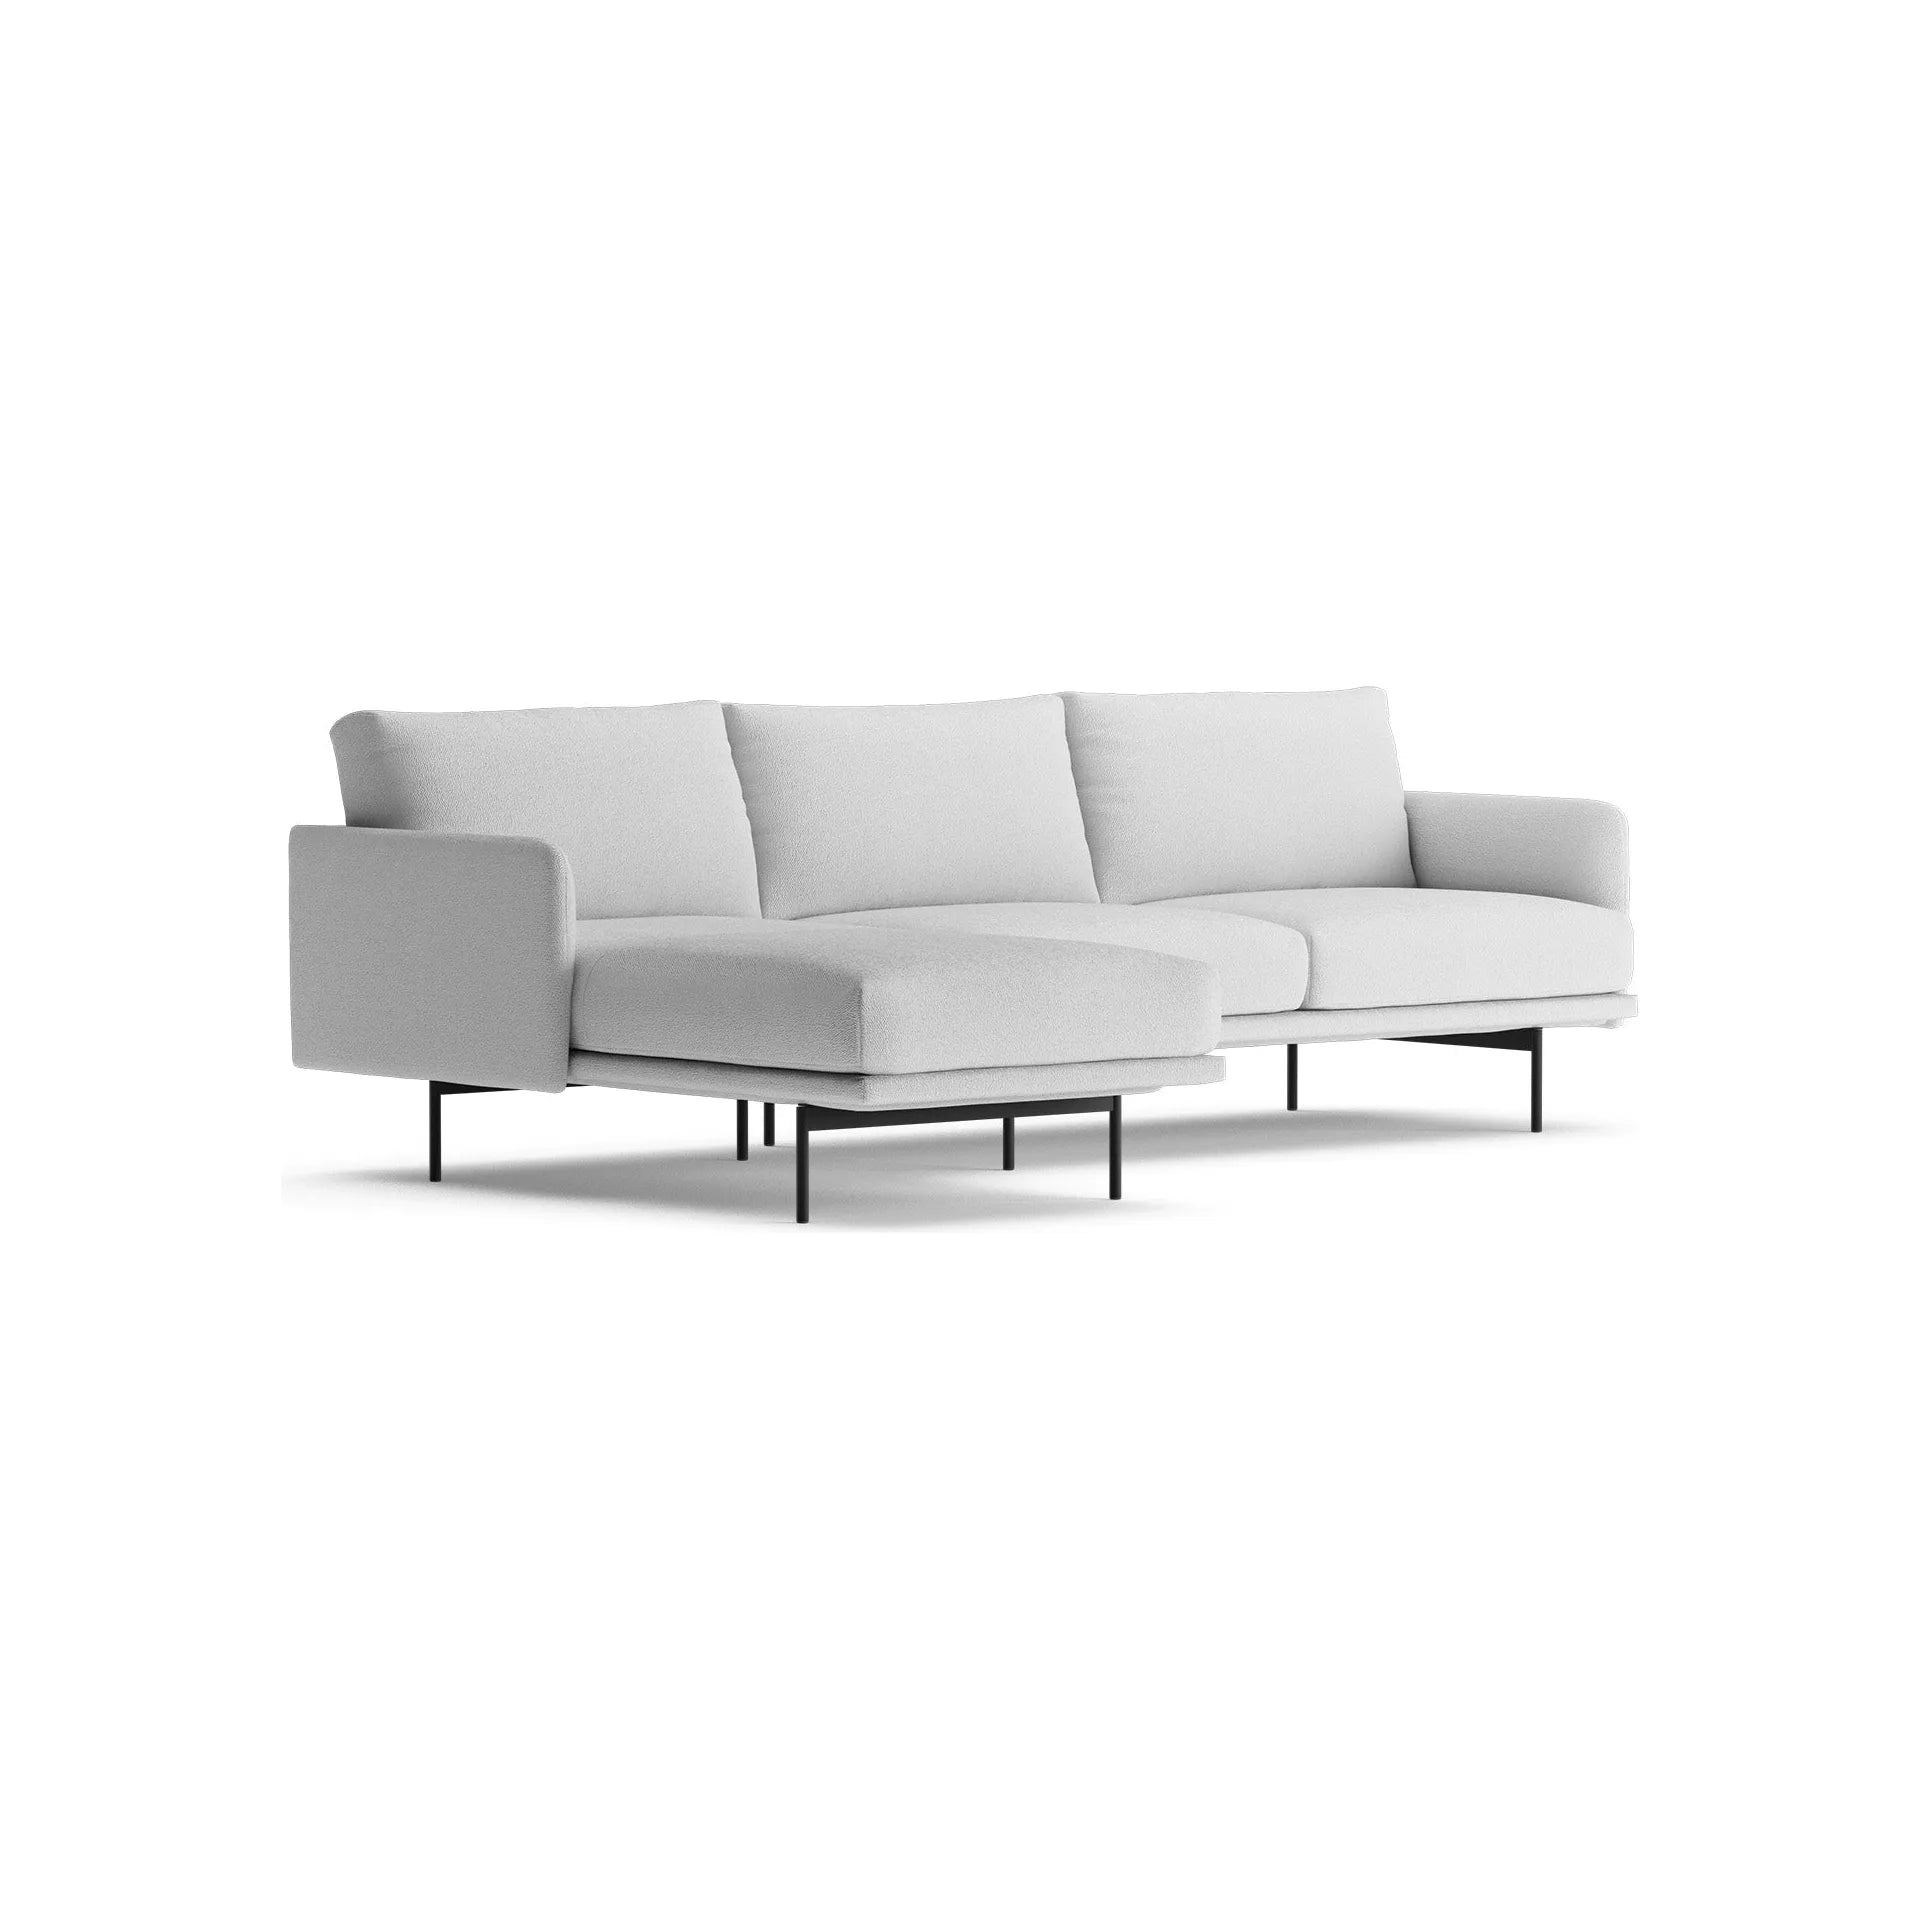 UMA kampinė sofa, pilka spalva, kairė pusė